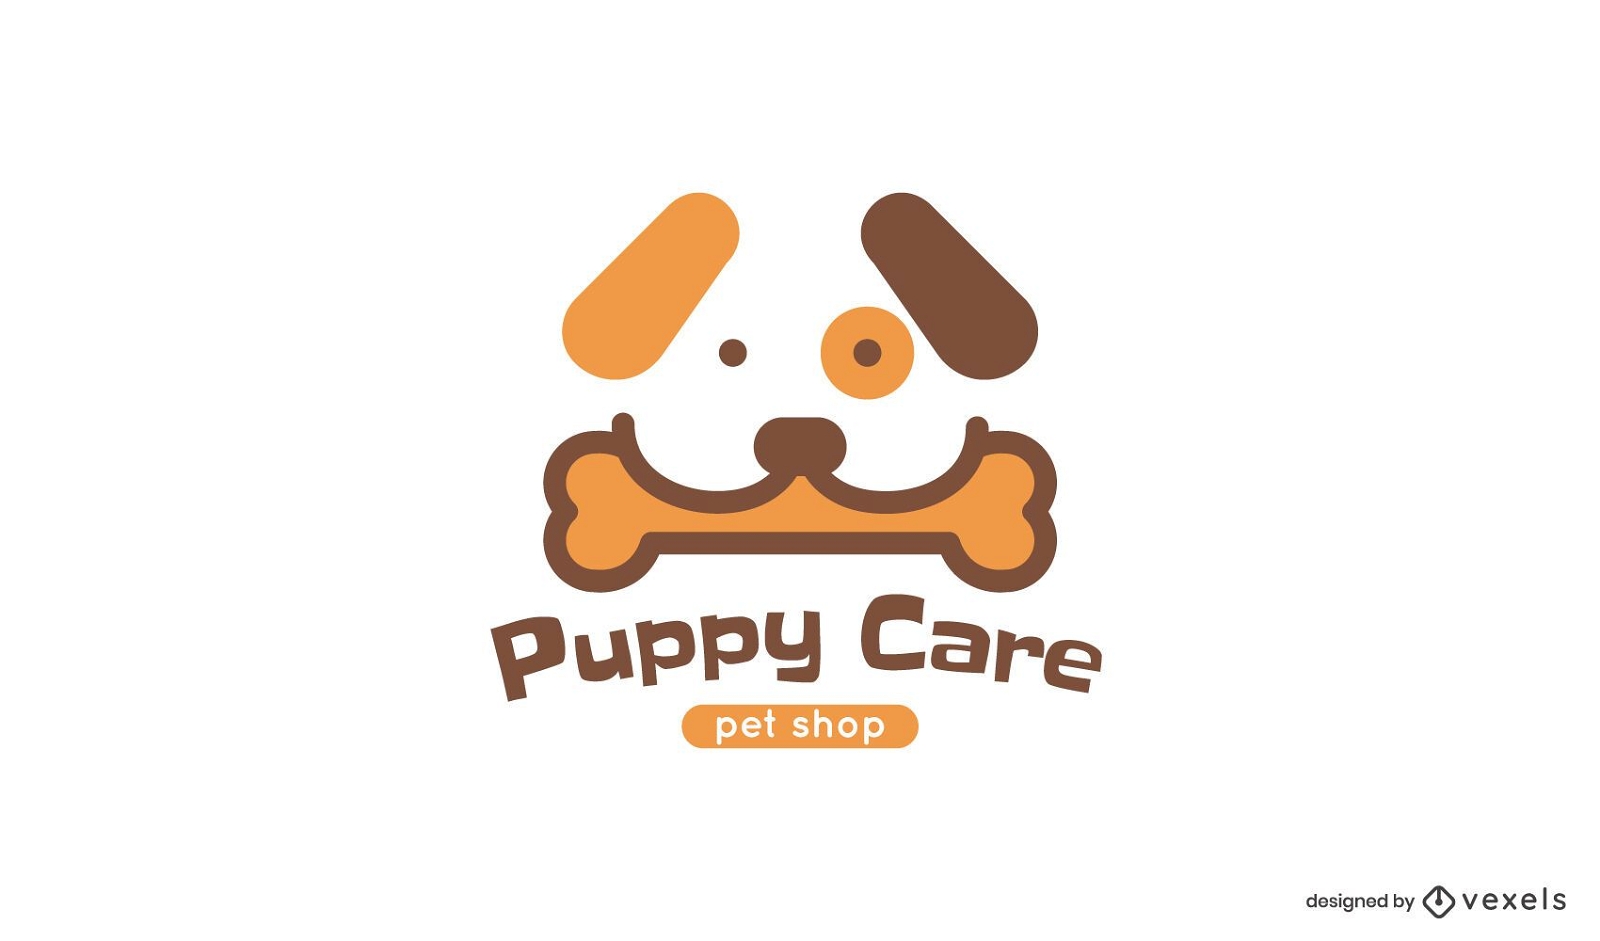 Puppy care logo template